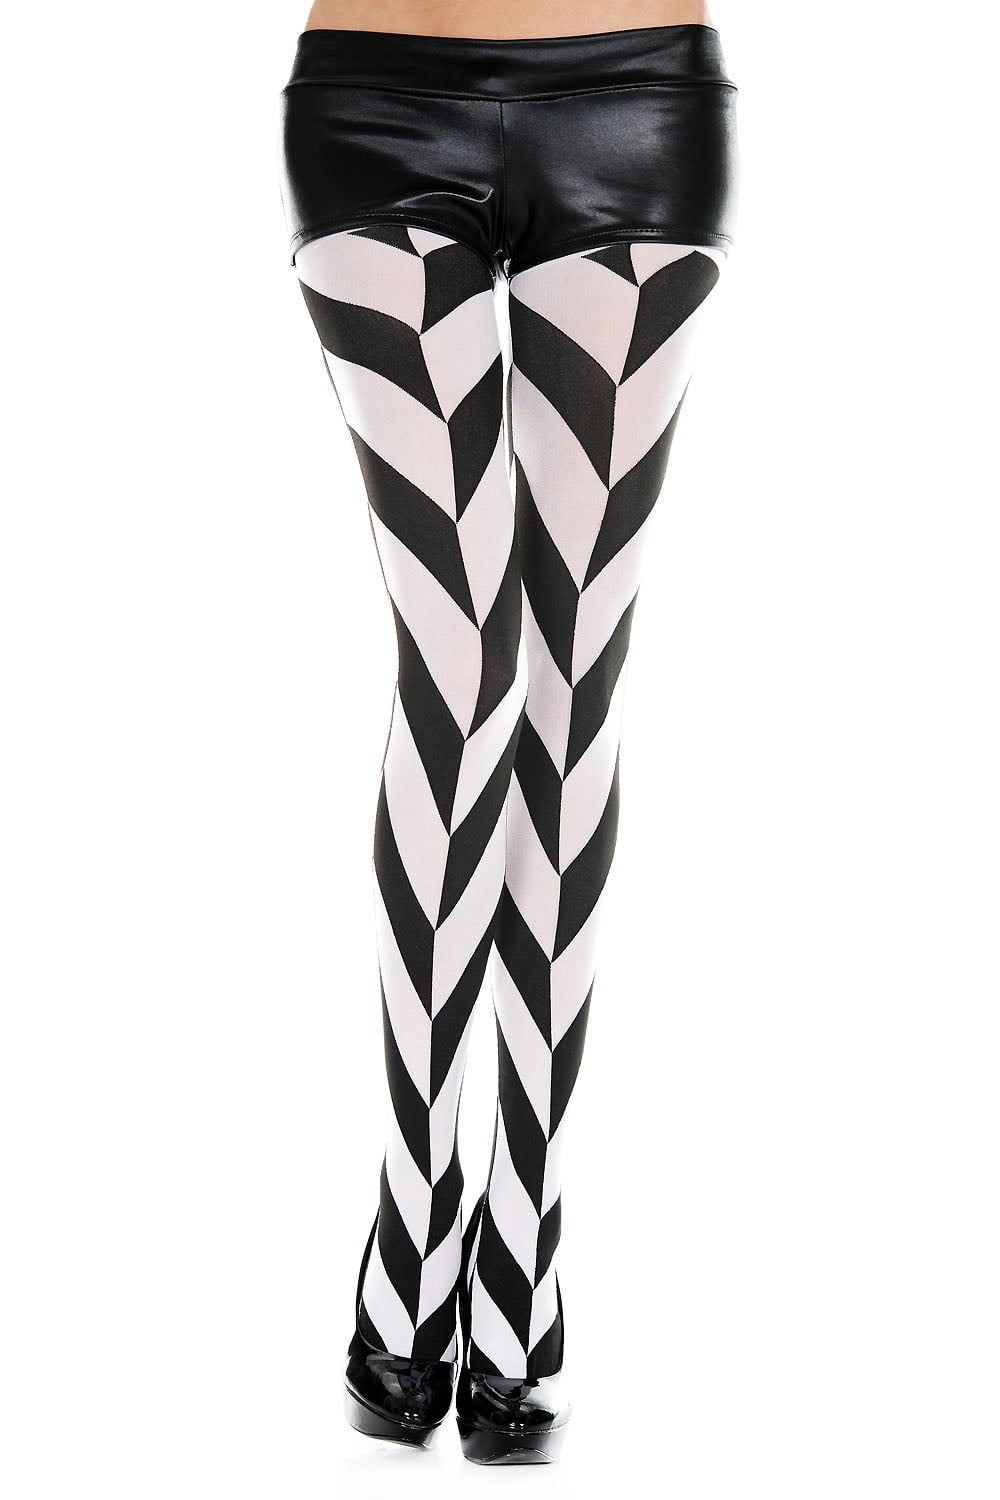 Women's Black and White Diagonal Striped Tights 7085-Black/White 